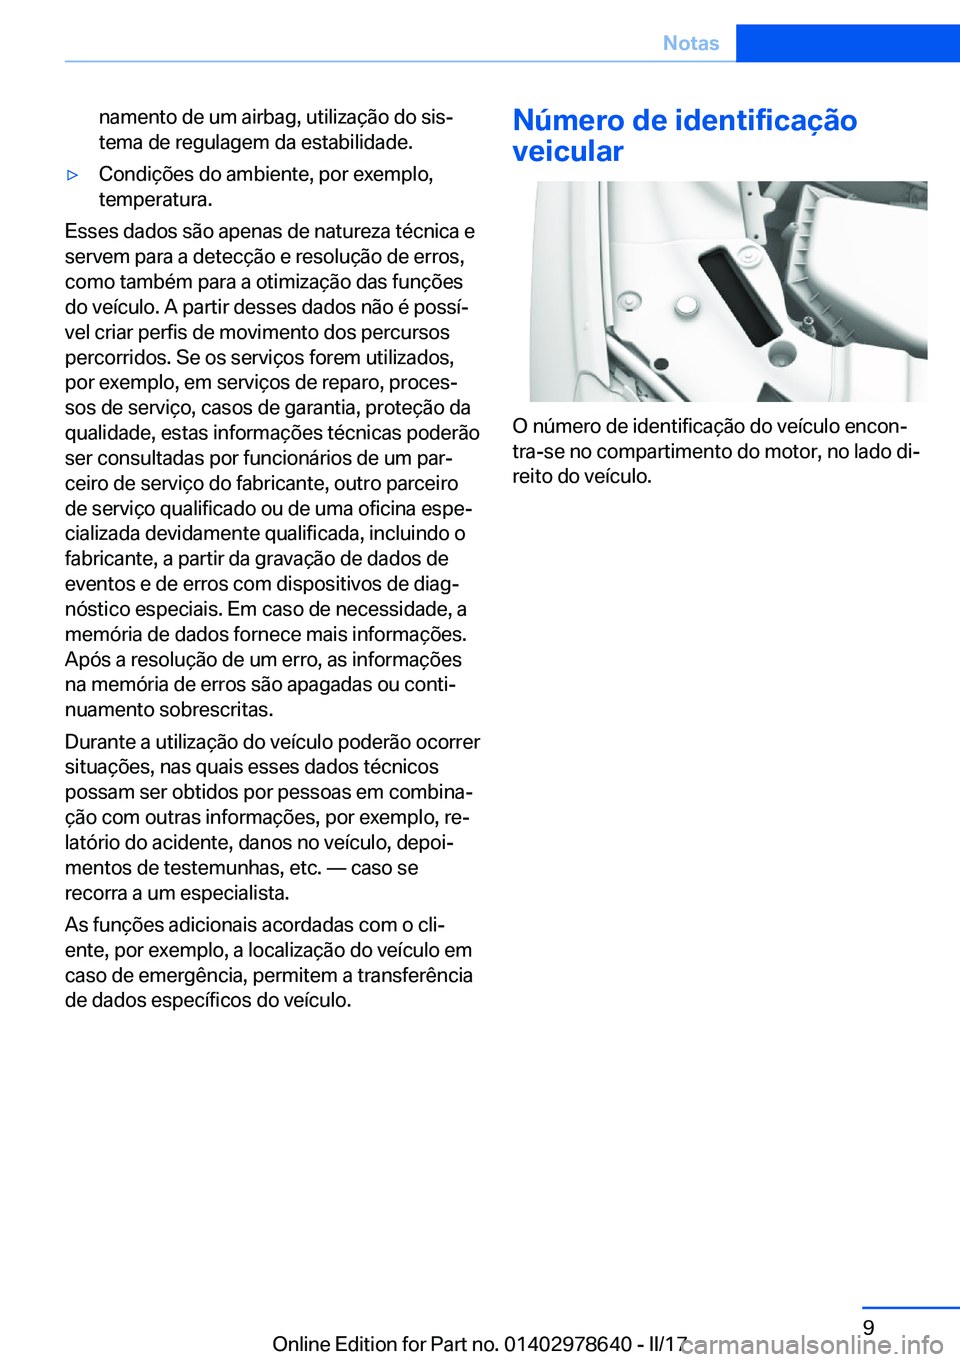 BMW 7 SERIES 2018  Manual do condutor (in Portuguese) �n�a�m�e�n�t�o� �d�e� �u�m� �a�i�r�b�a�g�,� �u�t�i�l�i�z�a�ç�ã�o� �d�o� �s�i�sª�t�e�m�a� �d�e� �r�e�g�u�l�a�g�e�m� �d�a� �e�s�t�a�b�i�l�i�d�a�d�e�.'y�C�o�n�d�i�ç�õ�e�s� �d�o� �a�m�b�i�e�n�t�